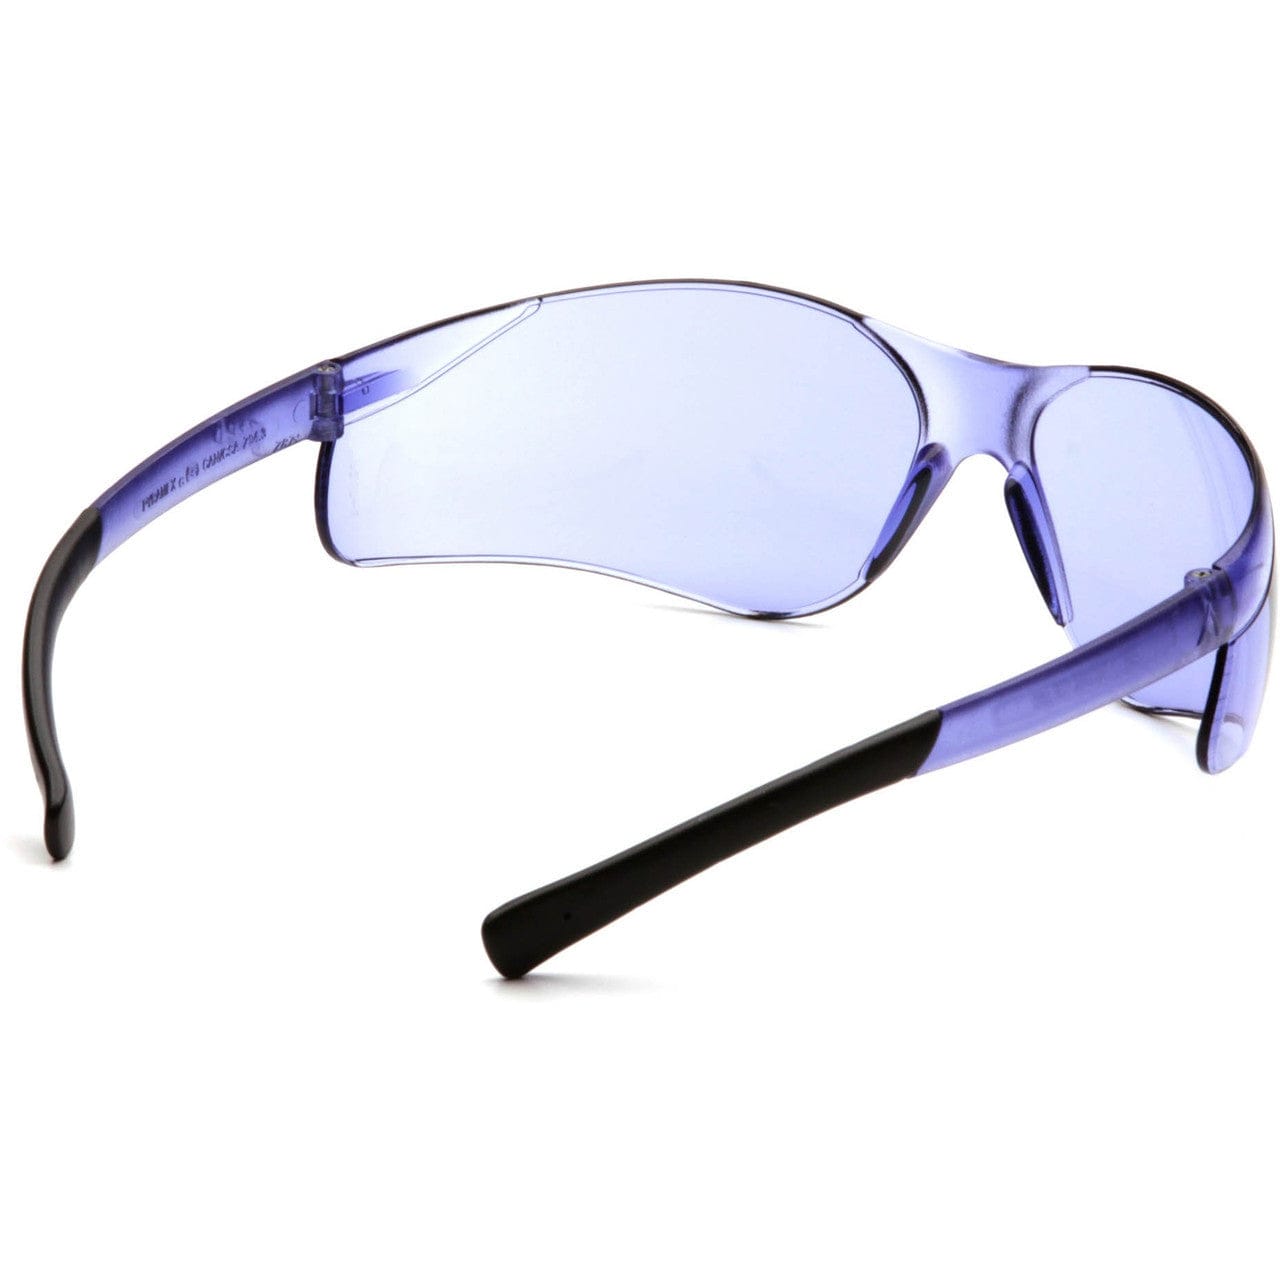 Pyramex Ztek Safety Glasses with Purple Haze Lens S2565S Inside View